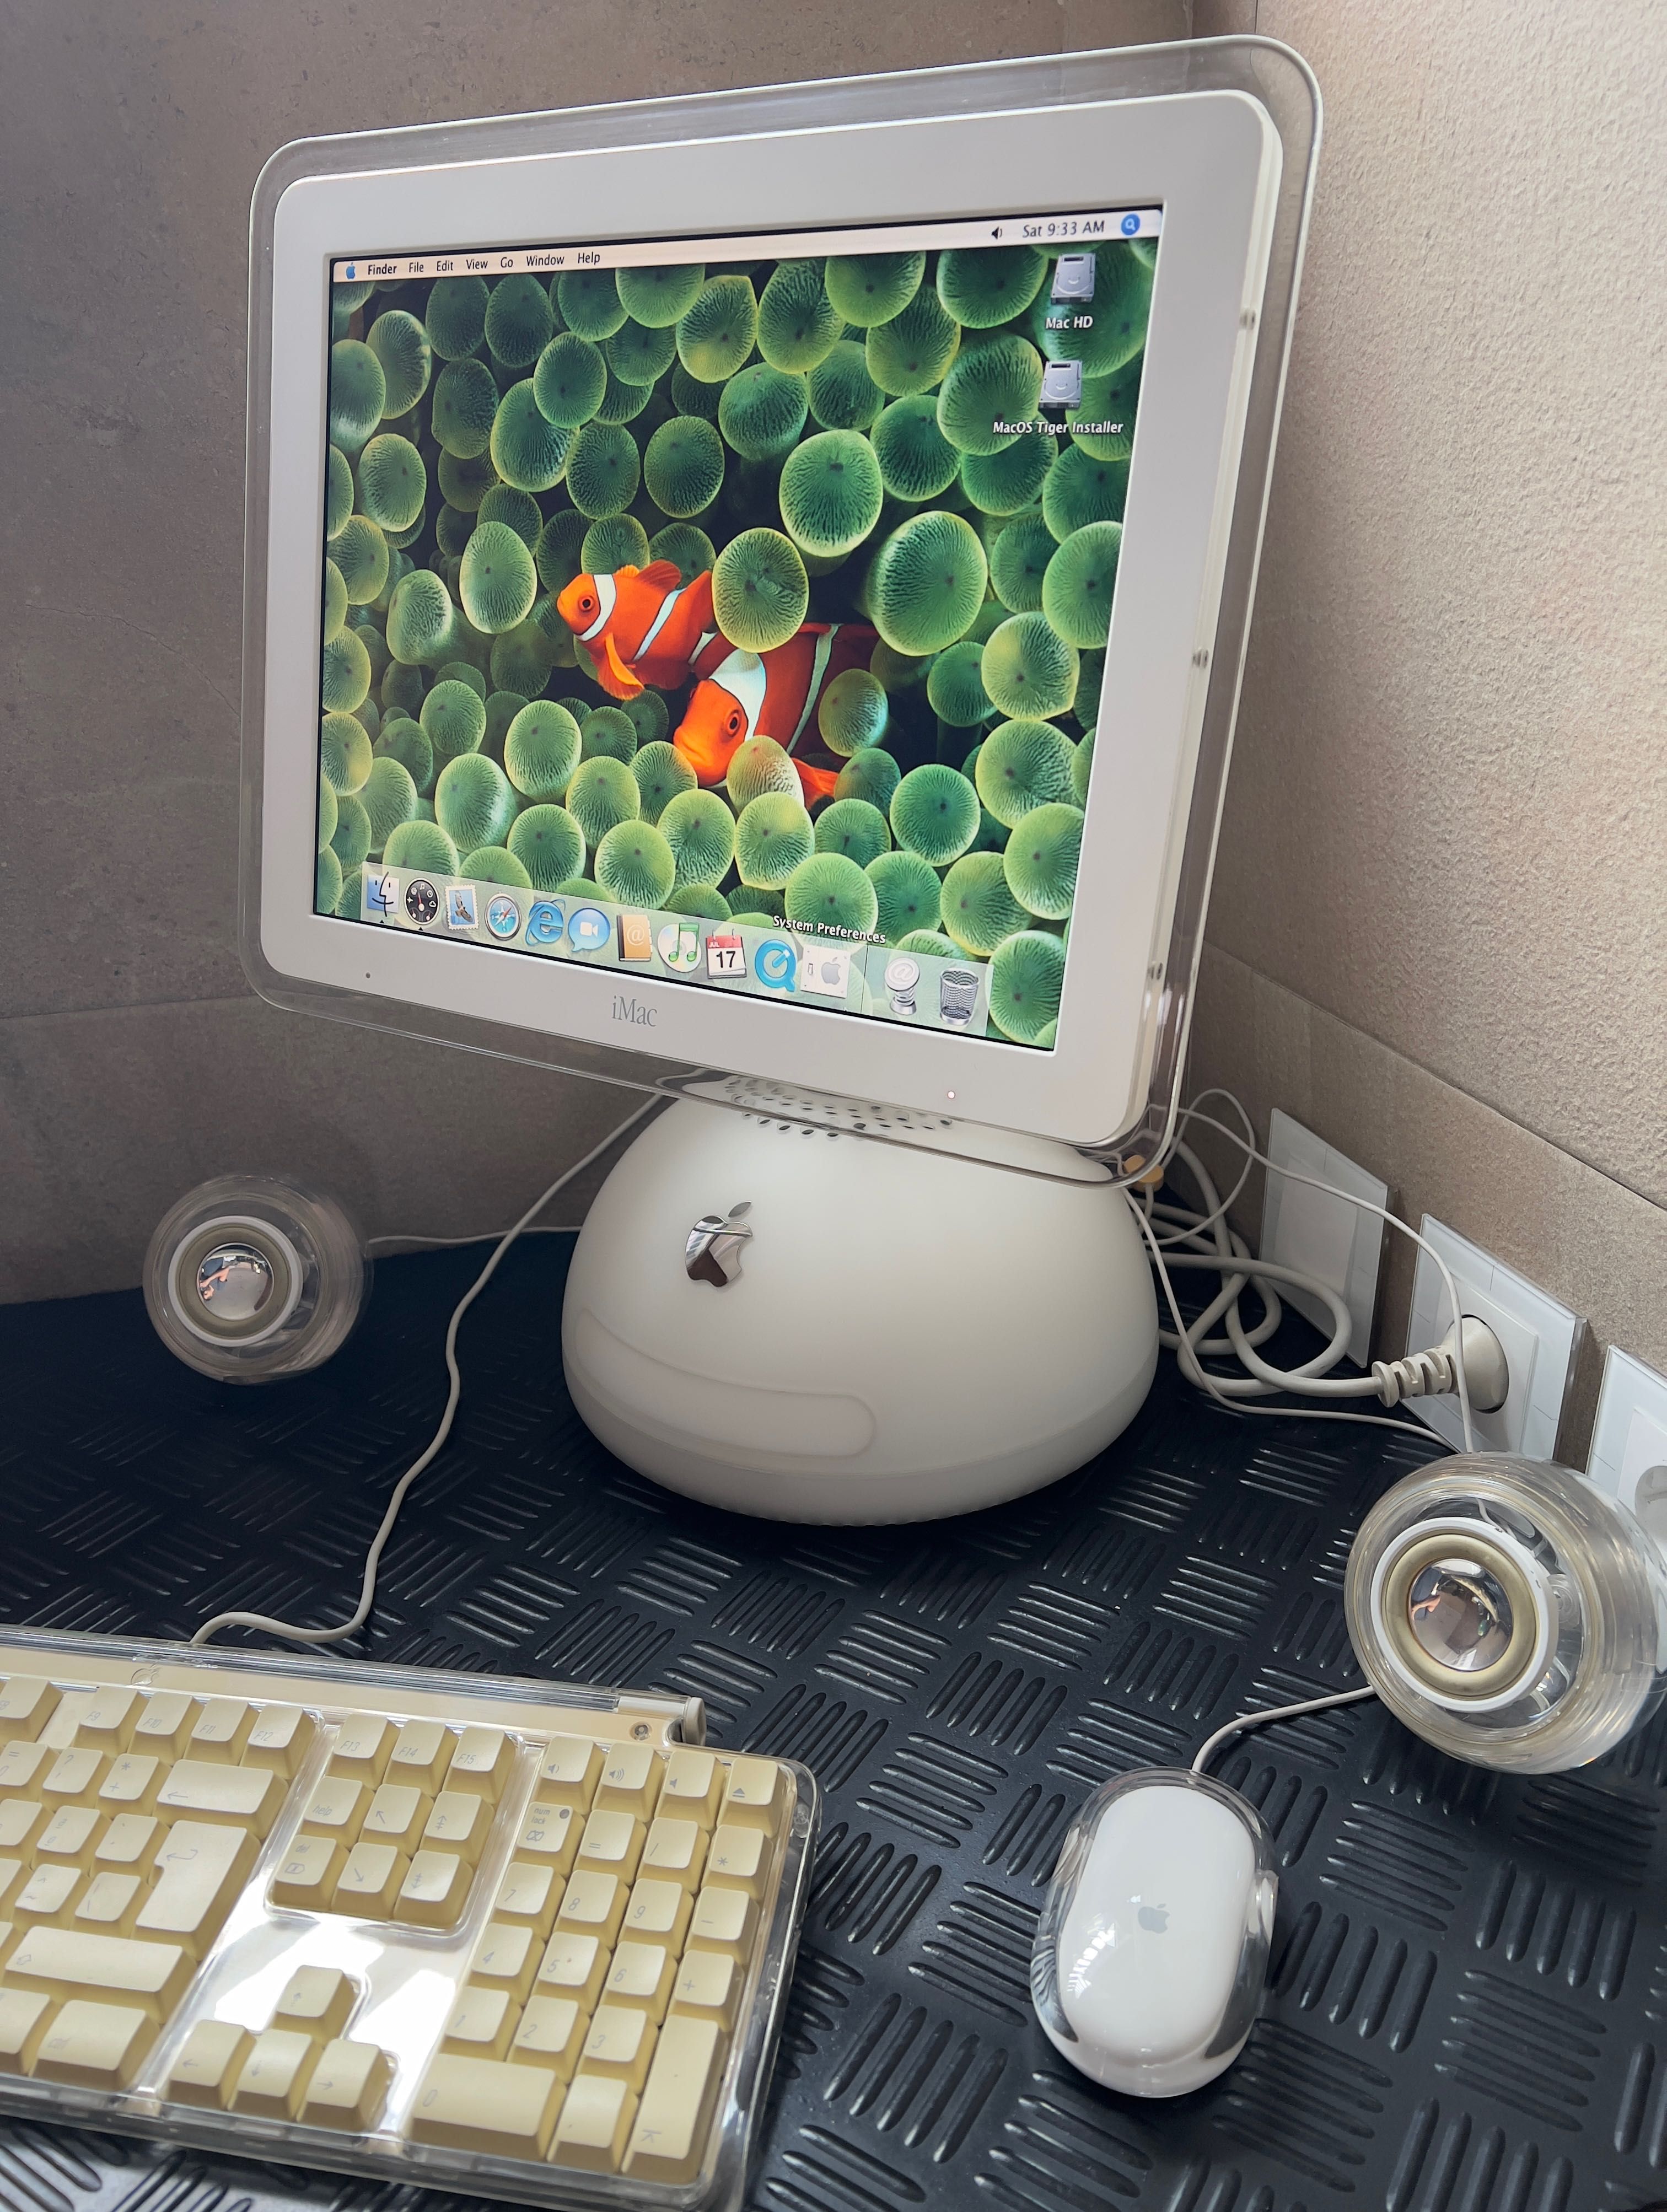 iMac G4 Completo